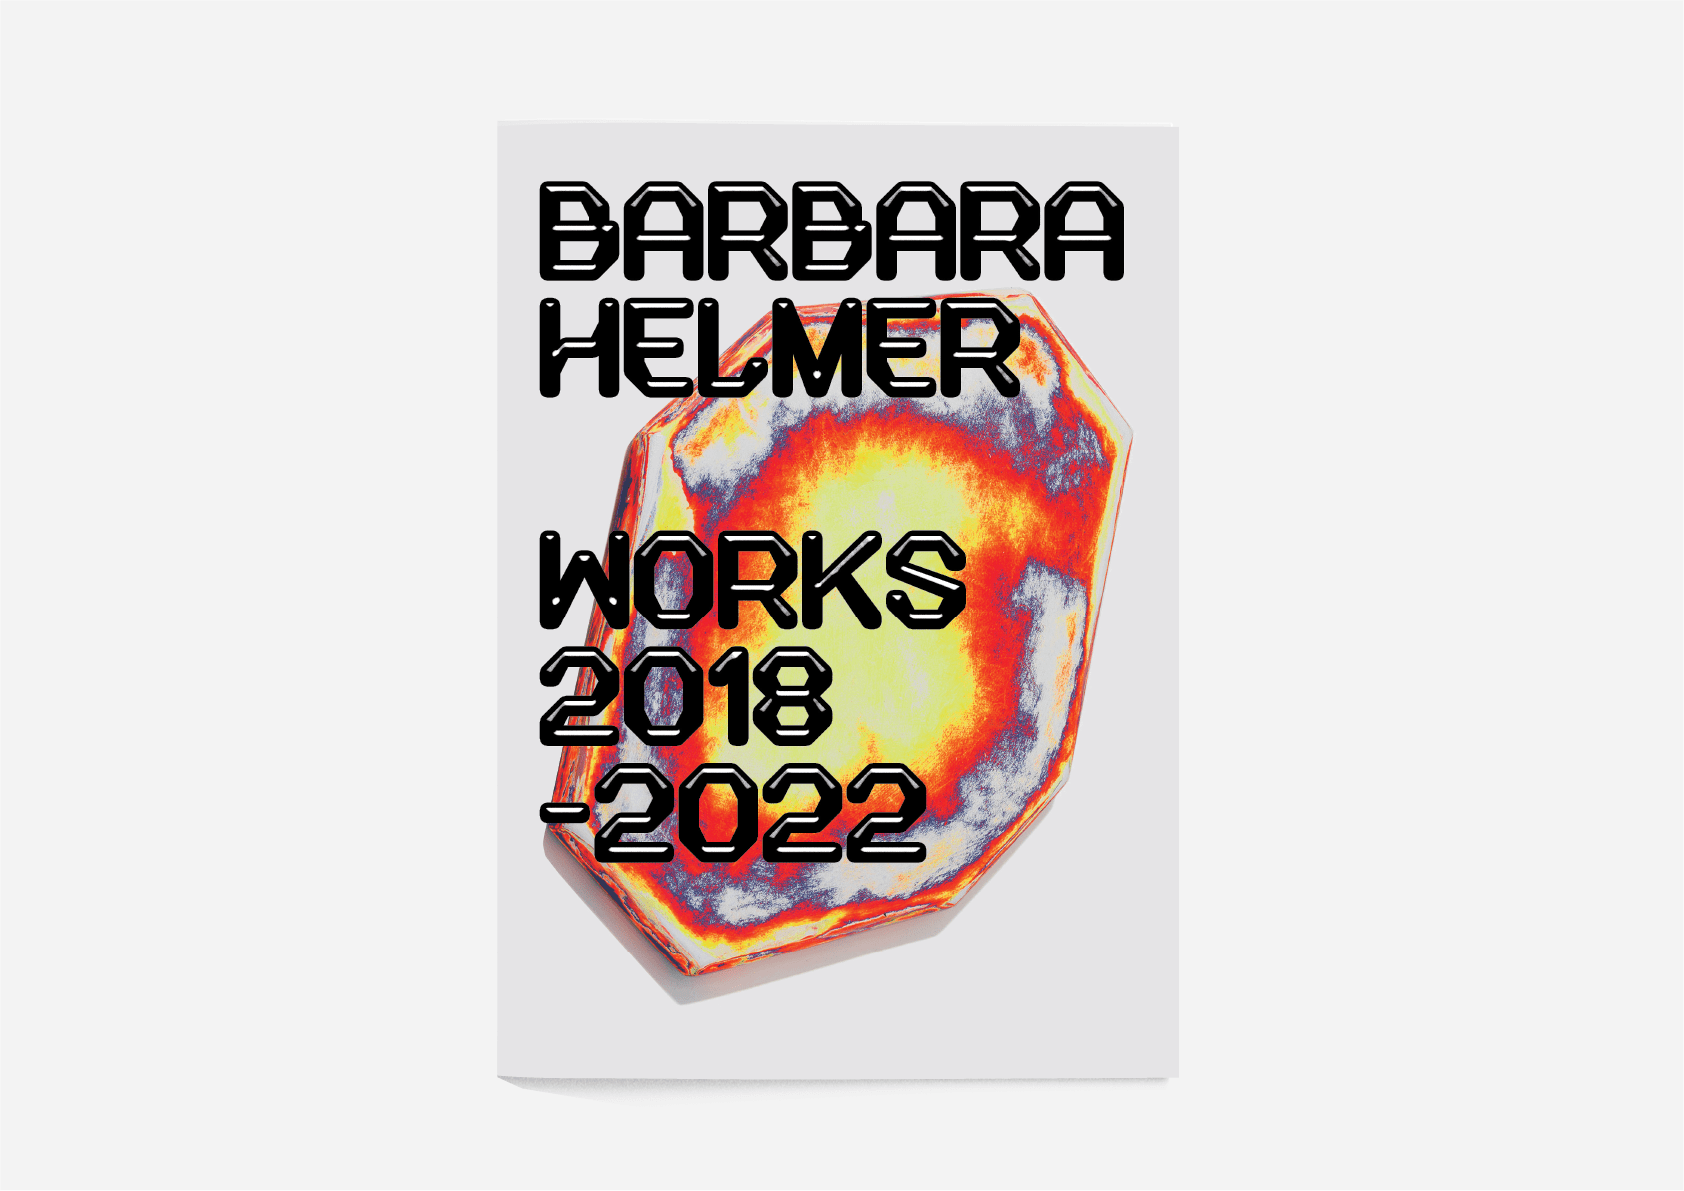 Magazine works 2018-2022